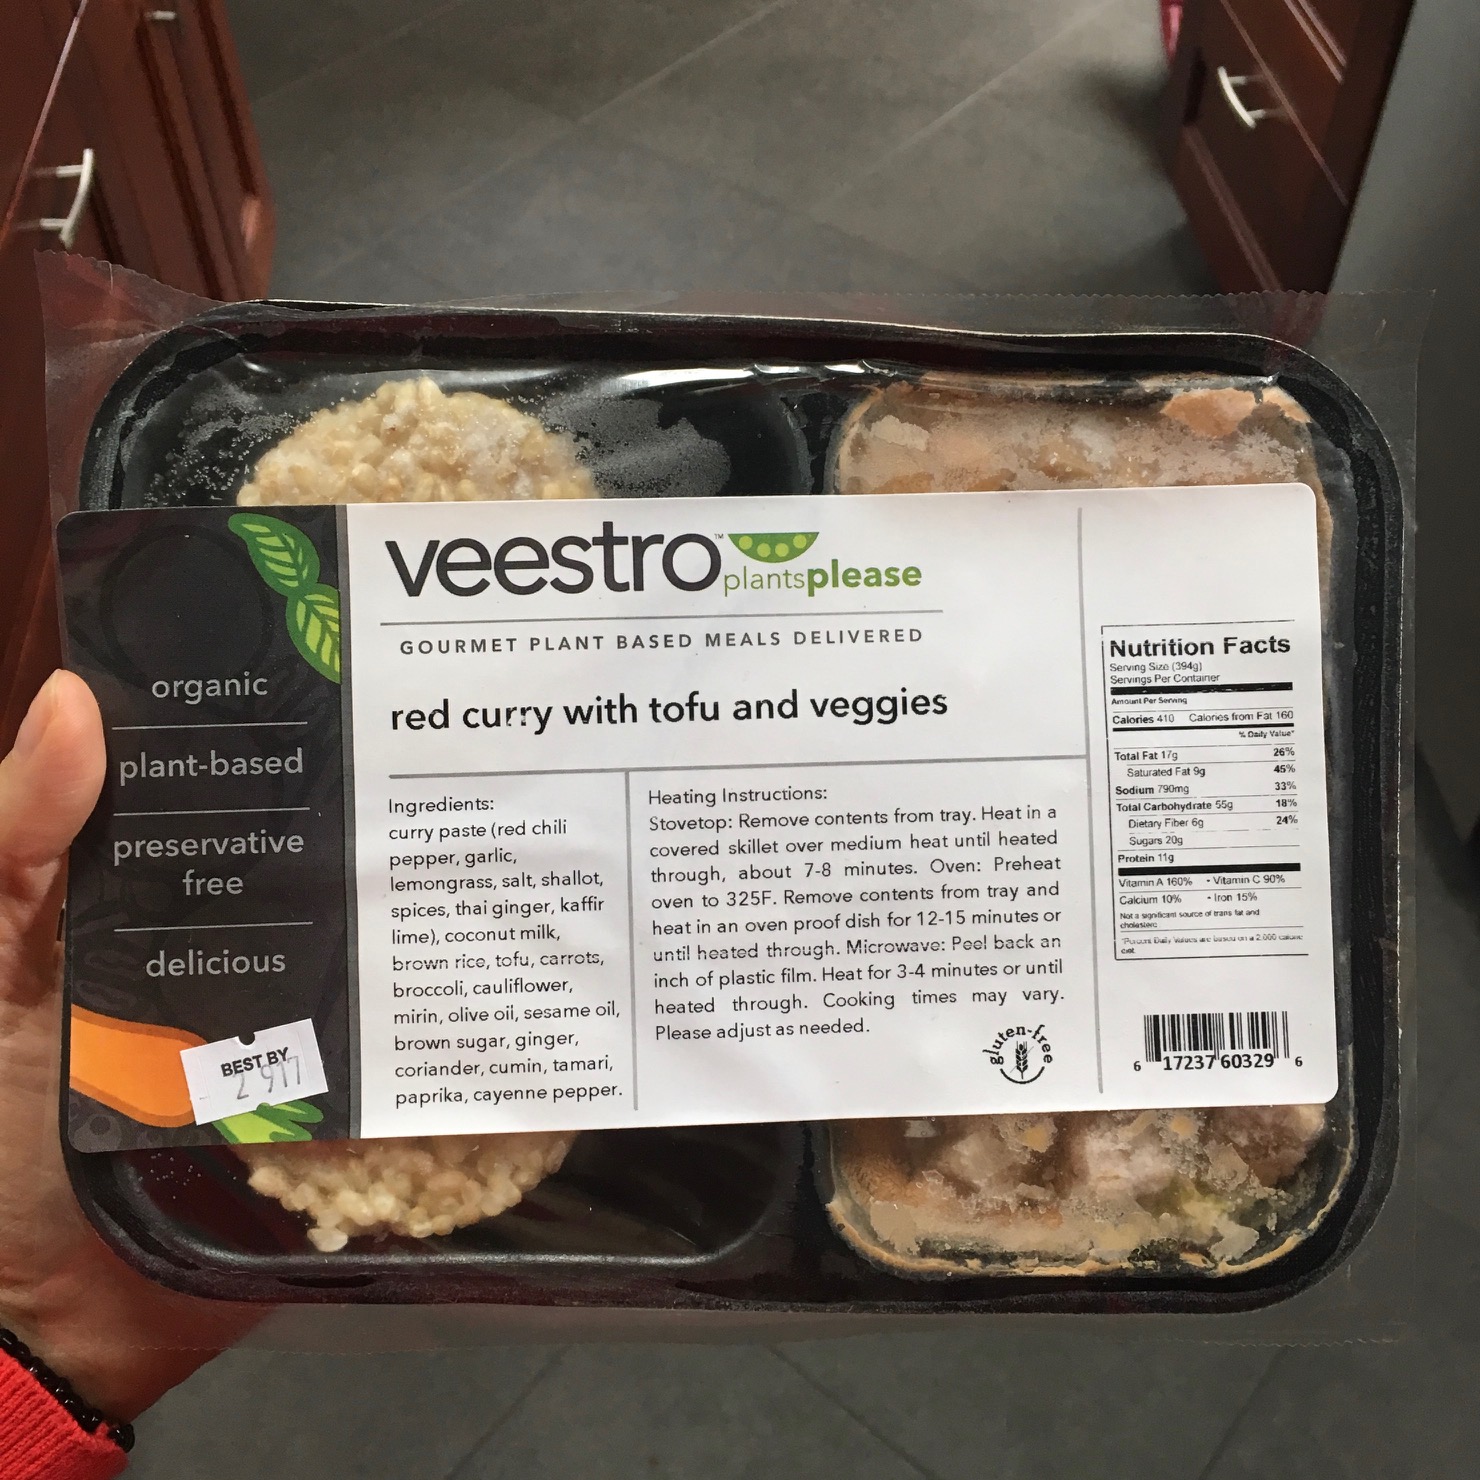 Veestro plant-based meals